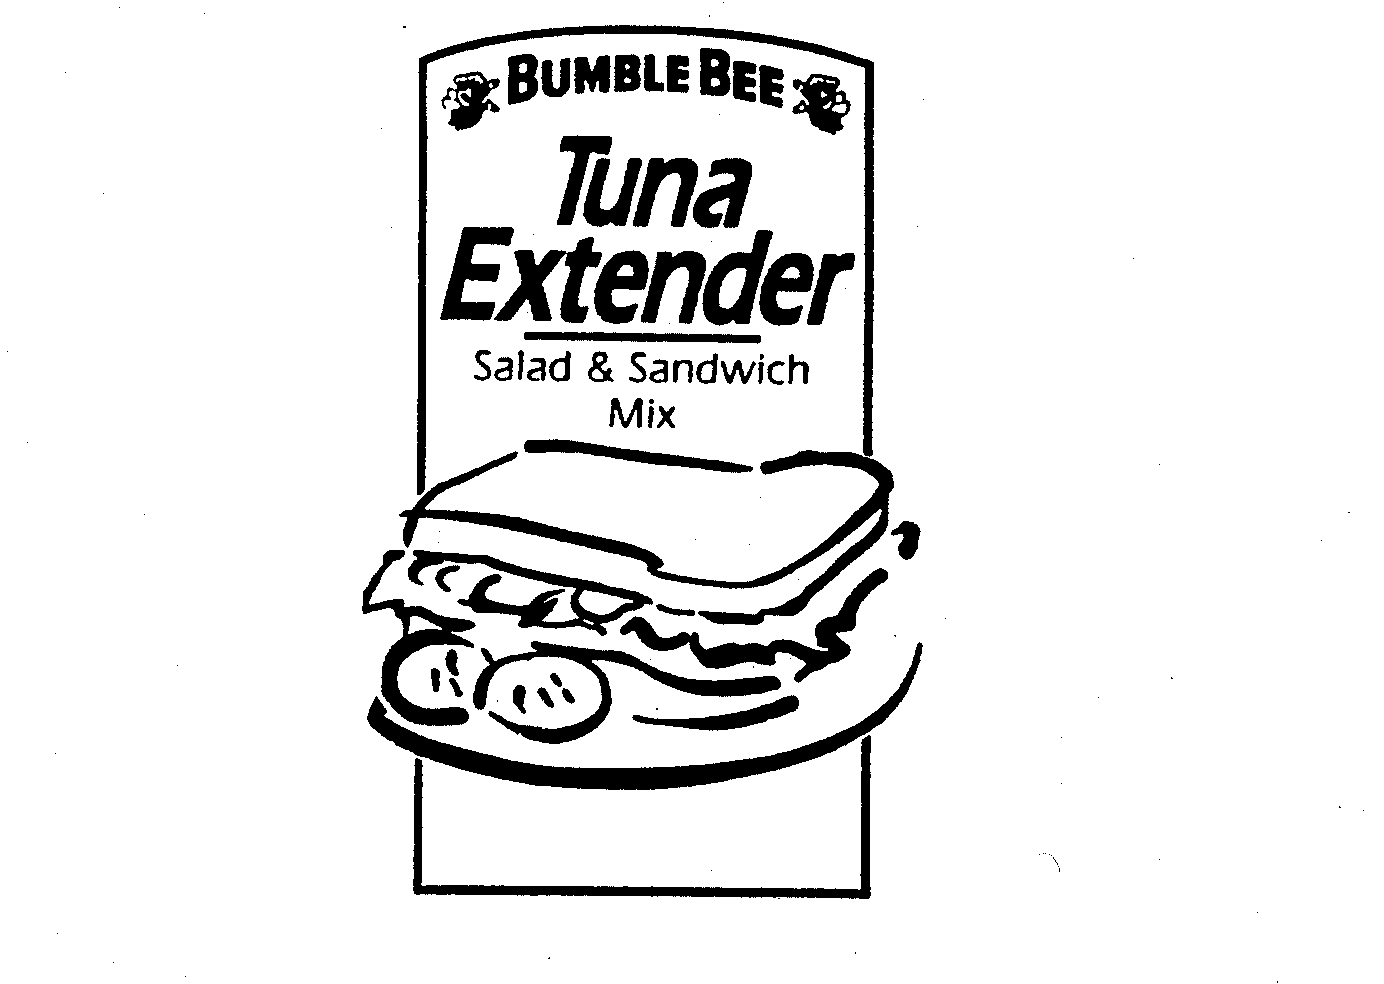  BUMBLE BEE TUNA EXTENDER SALAD &amp; SANDWICH MIX